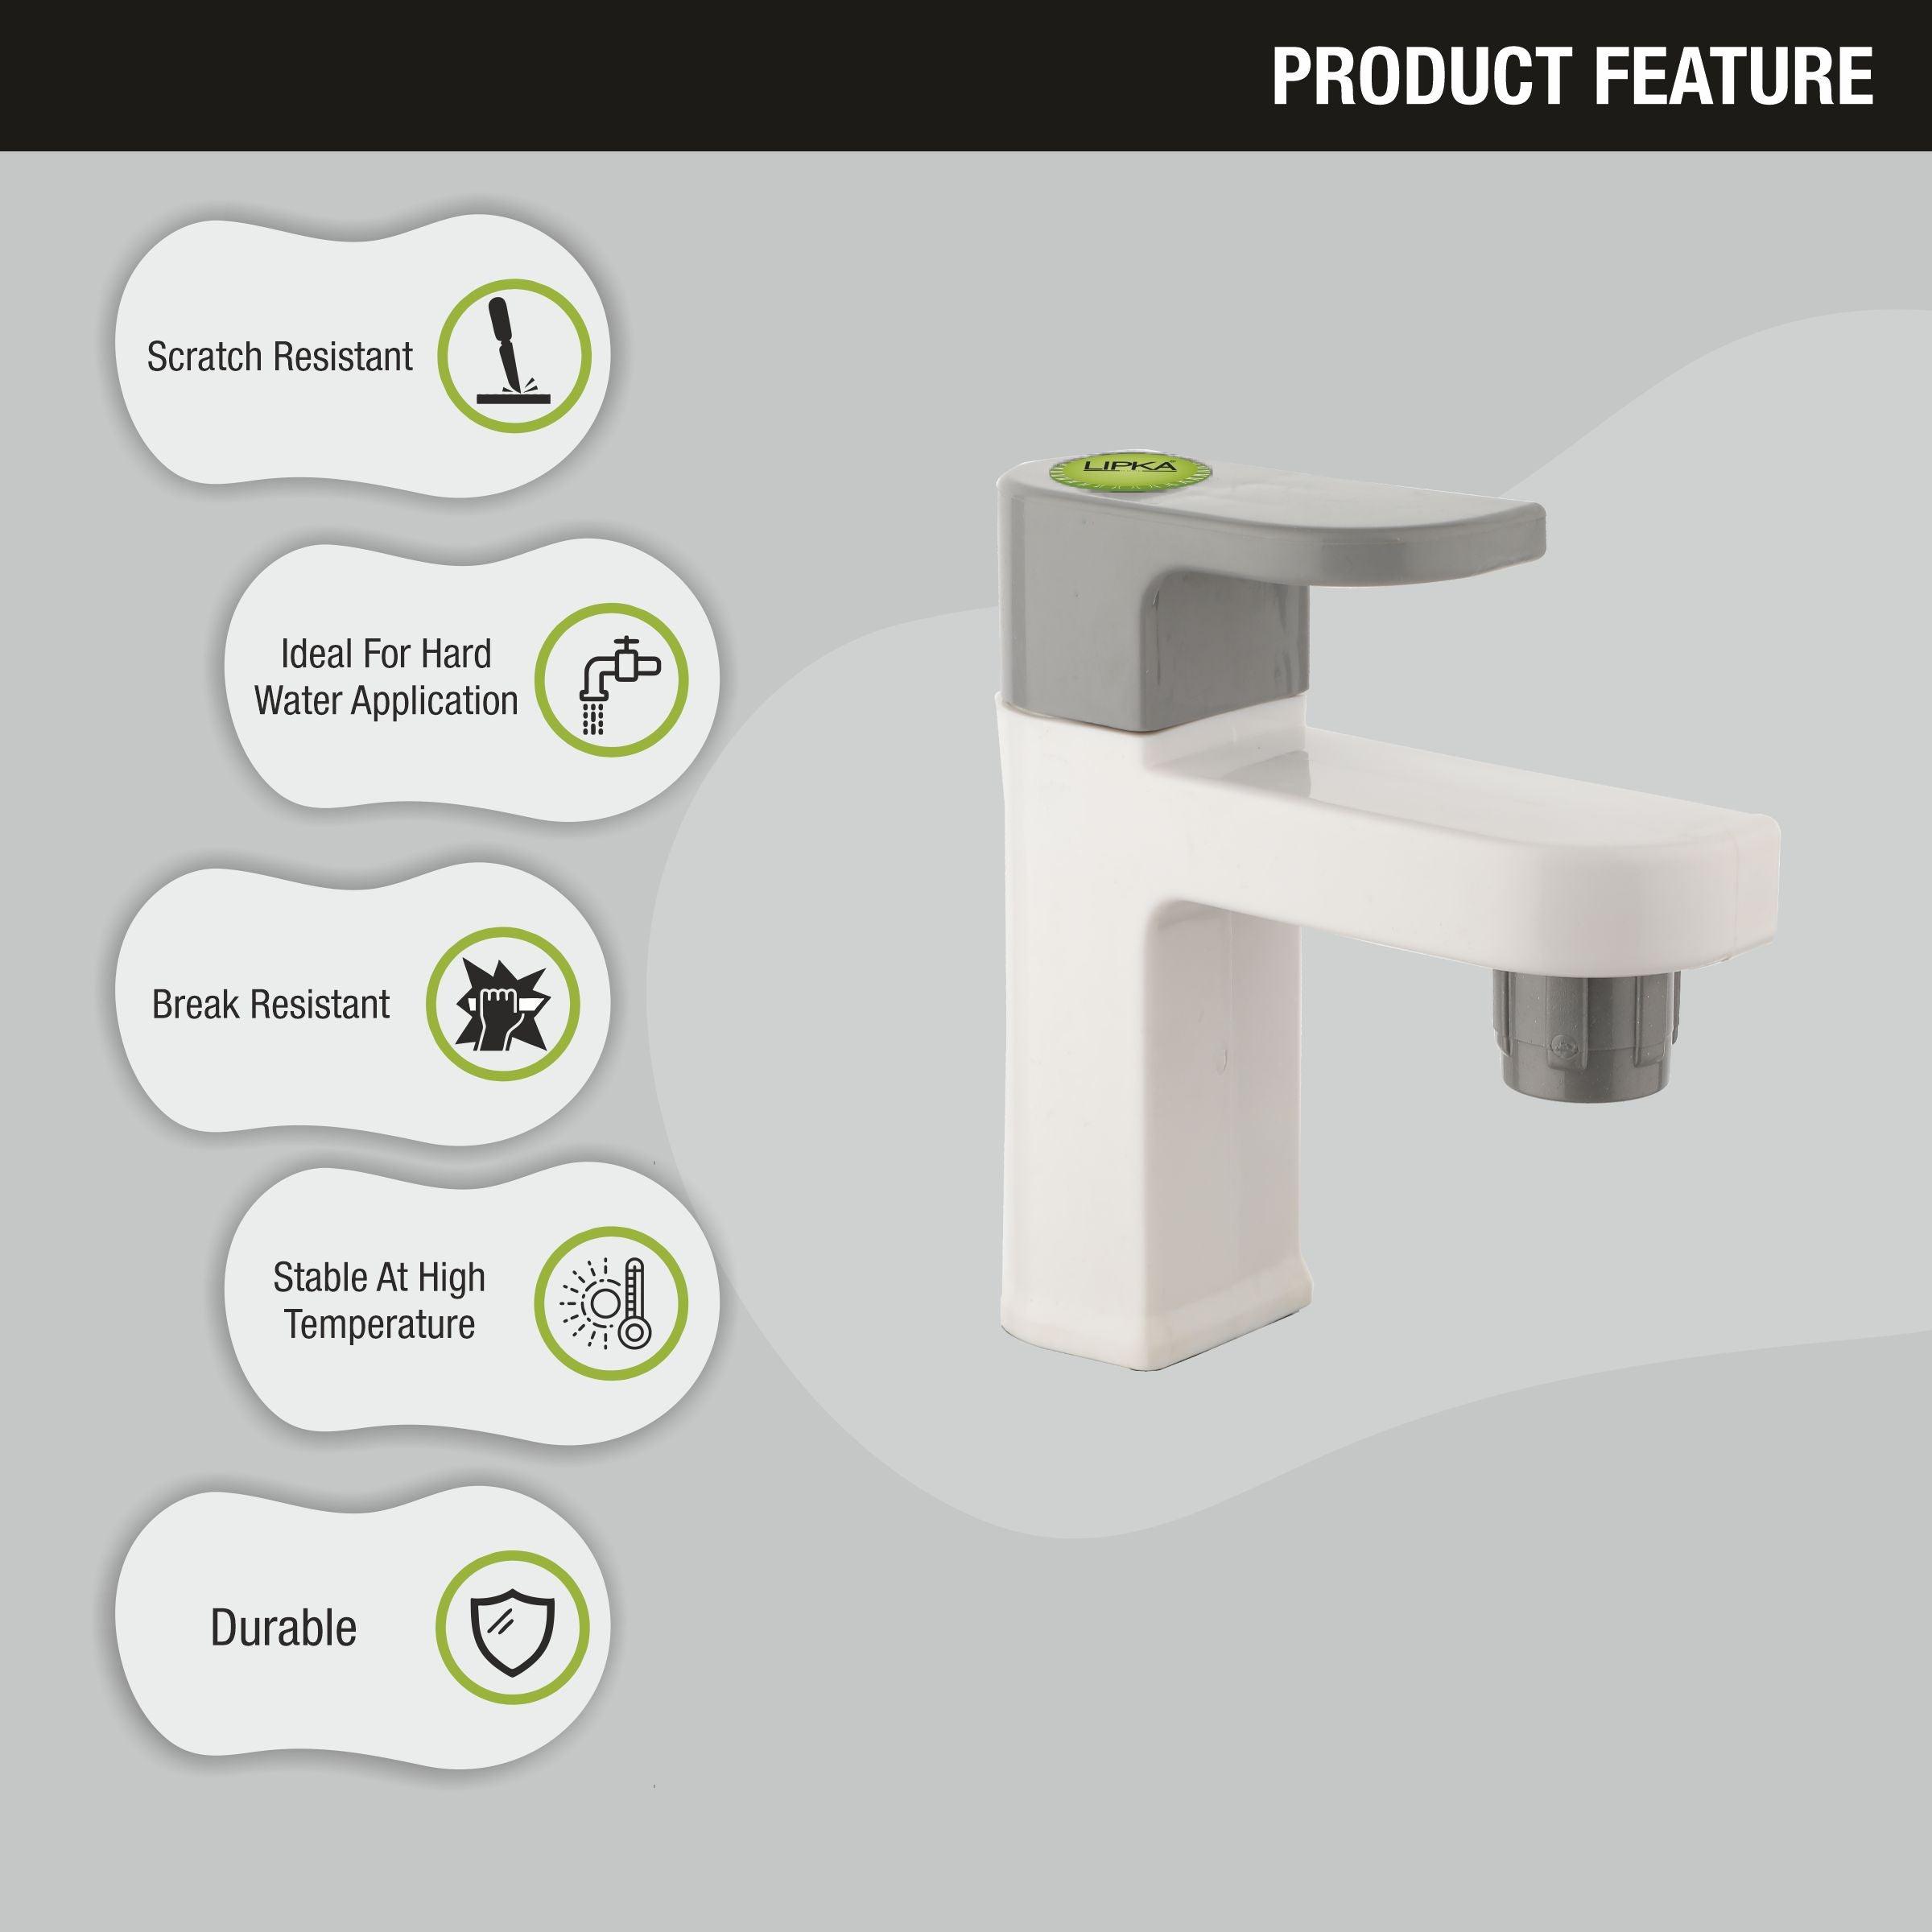 Flora Pillar Tap PTMT Faucet features